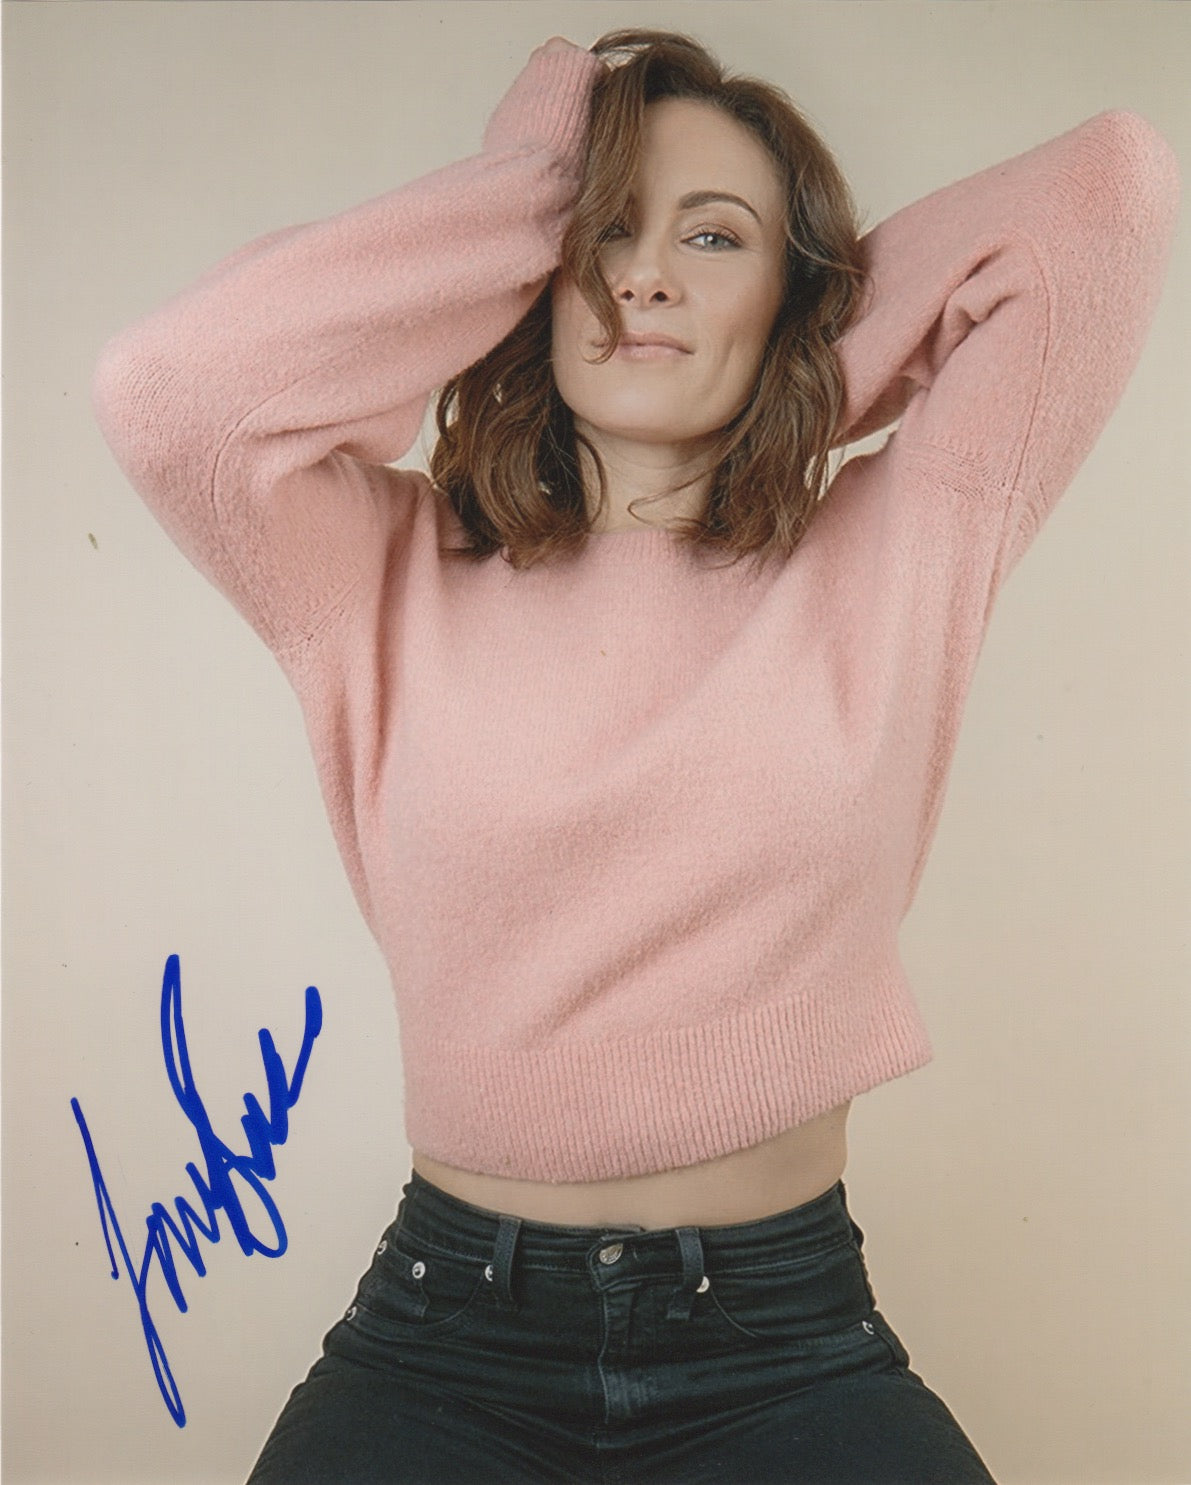 Laura Benanti Sexy Signed Autograph 8x10 Photo #2 - Outlaw Hobbies Authentic Autographs